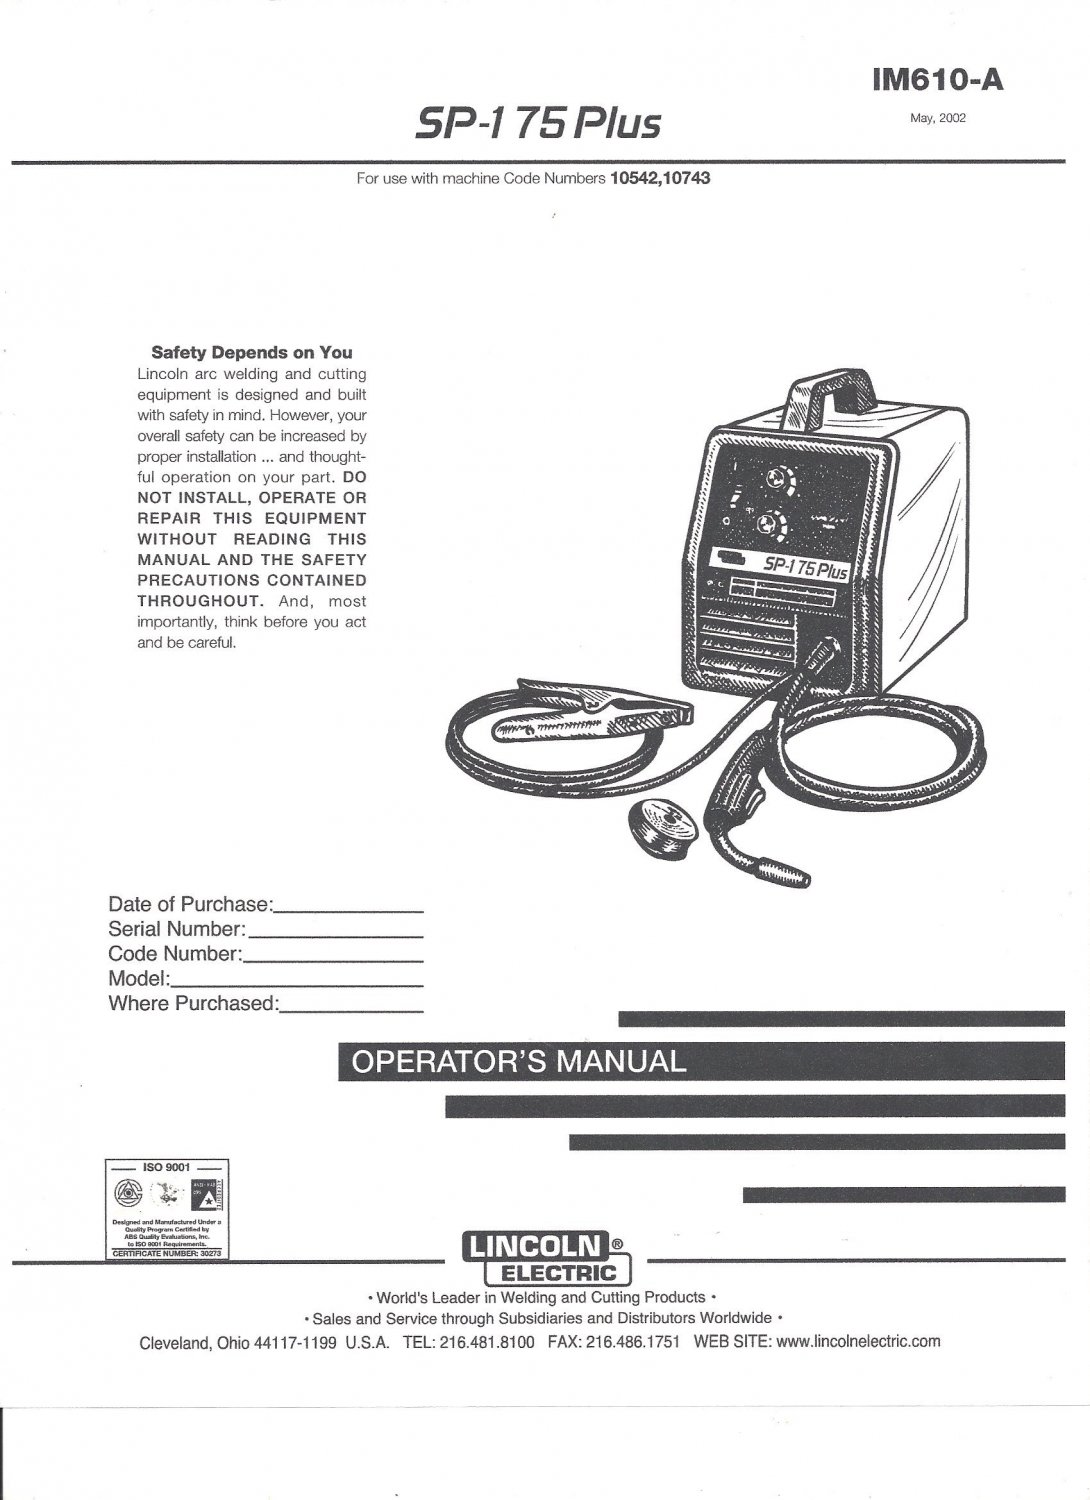 Lincoln Electric SP-175 PLUS Welder Operator's Manual ( Copy)